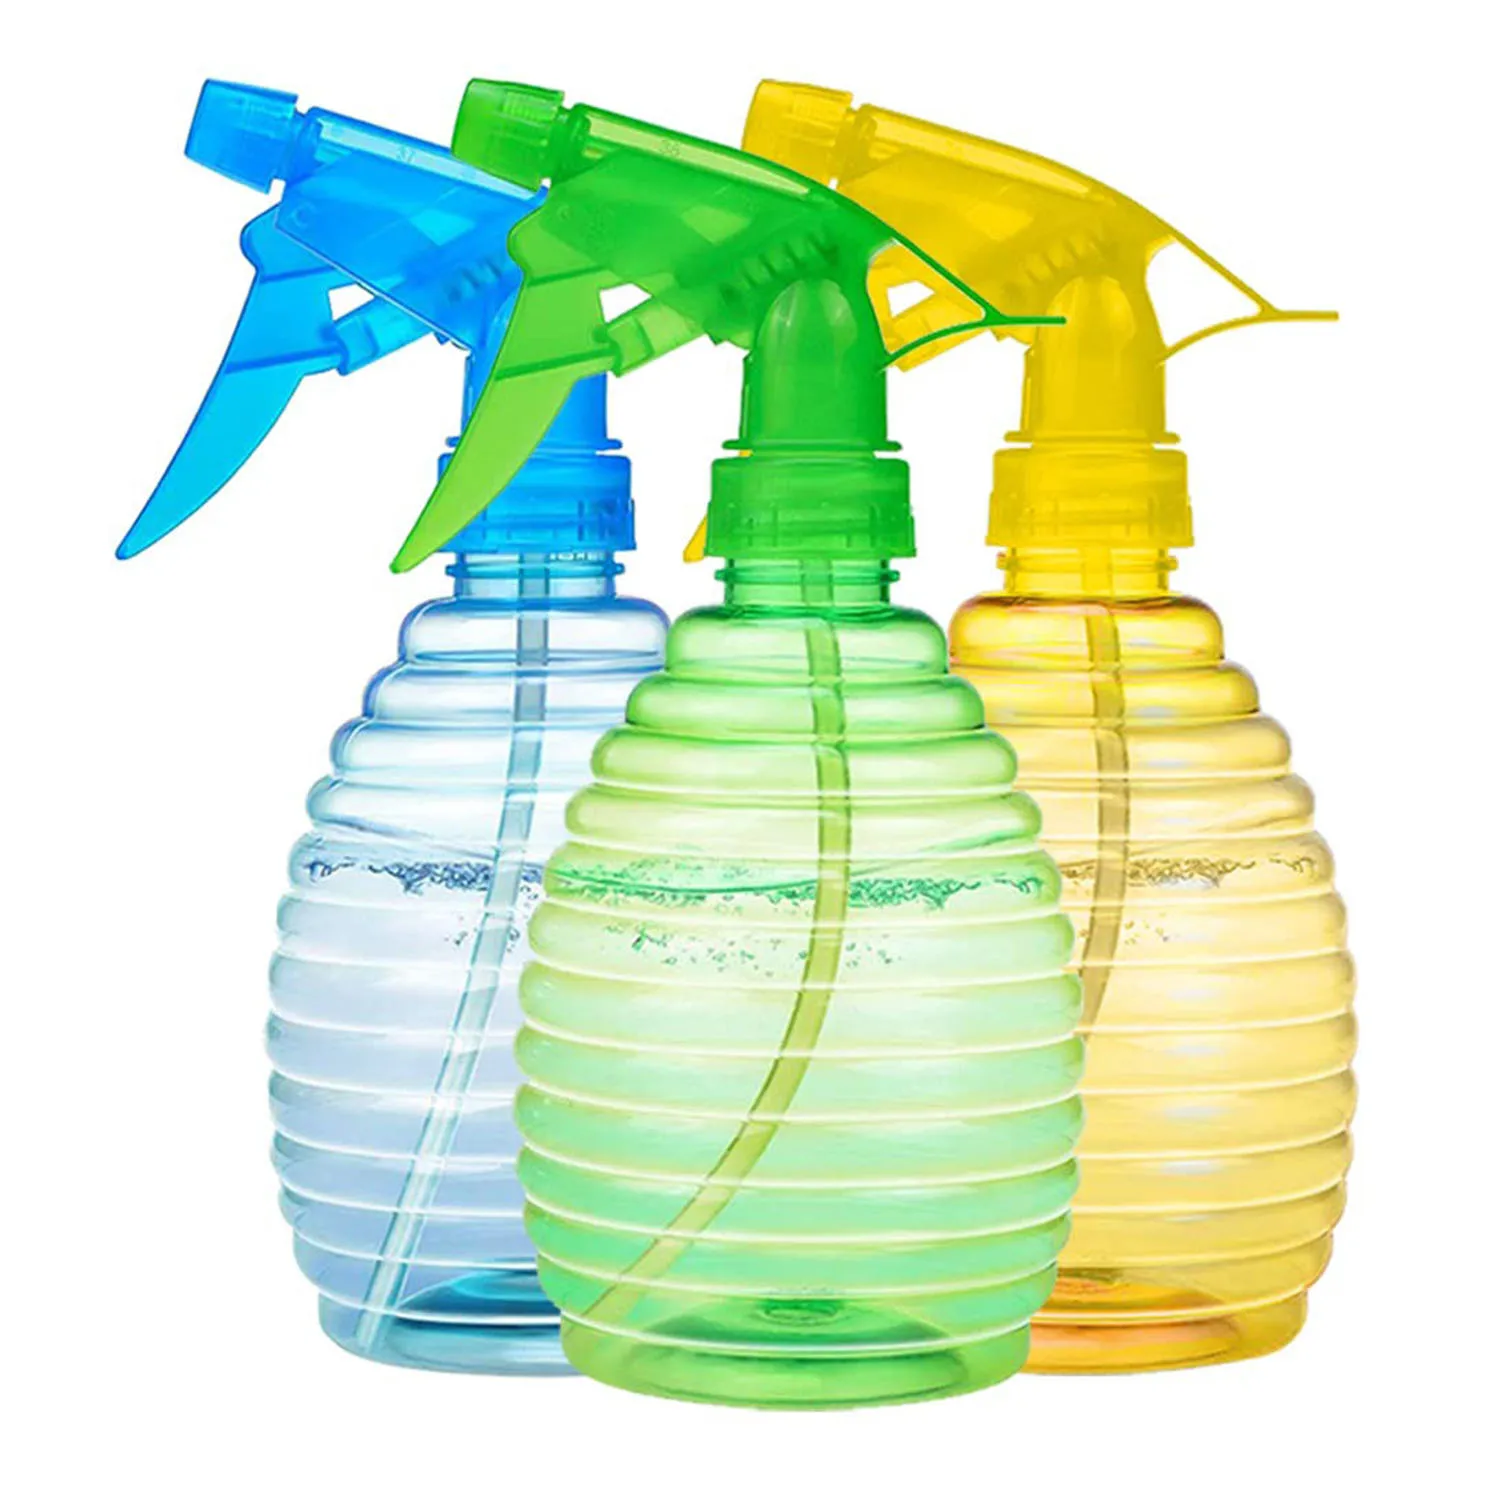 1 Pack Spray Bottles,16 Oz Empty Spray Bottles for Cleaning Solutions, Leak Proof, BPA Free, Spray Bottle for Plants, Pet